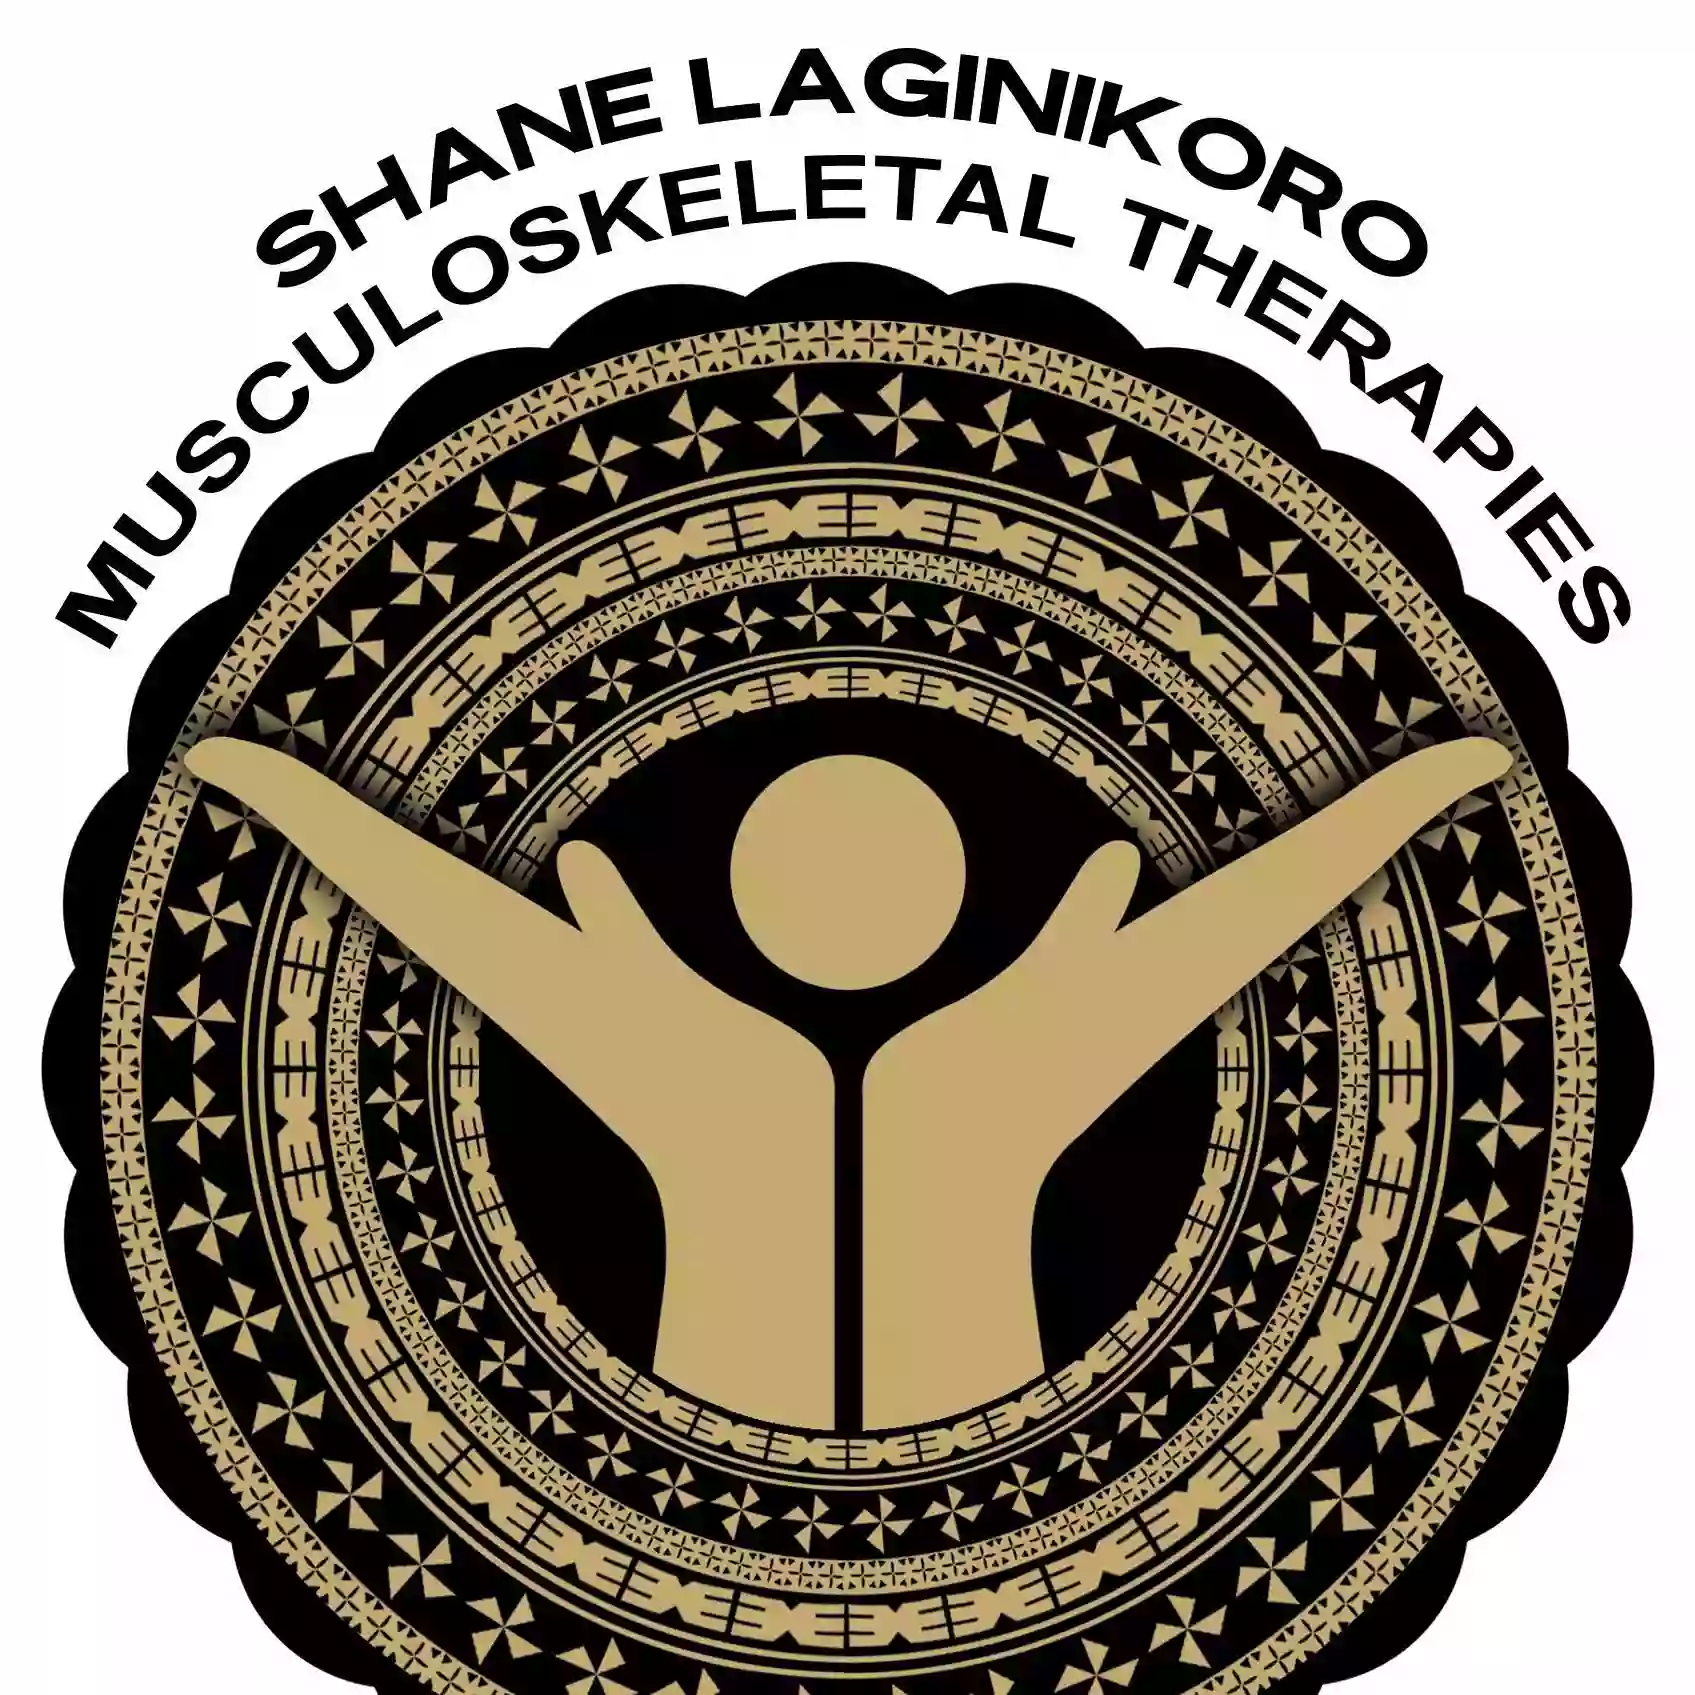 Shane Laginikoro-Musculoskeletal Therapies